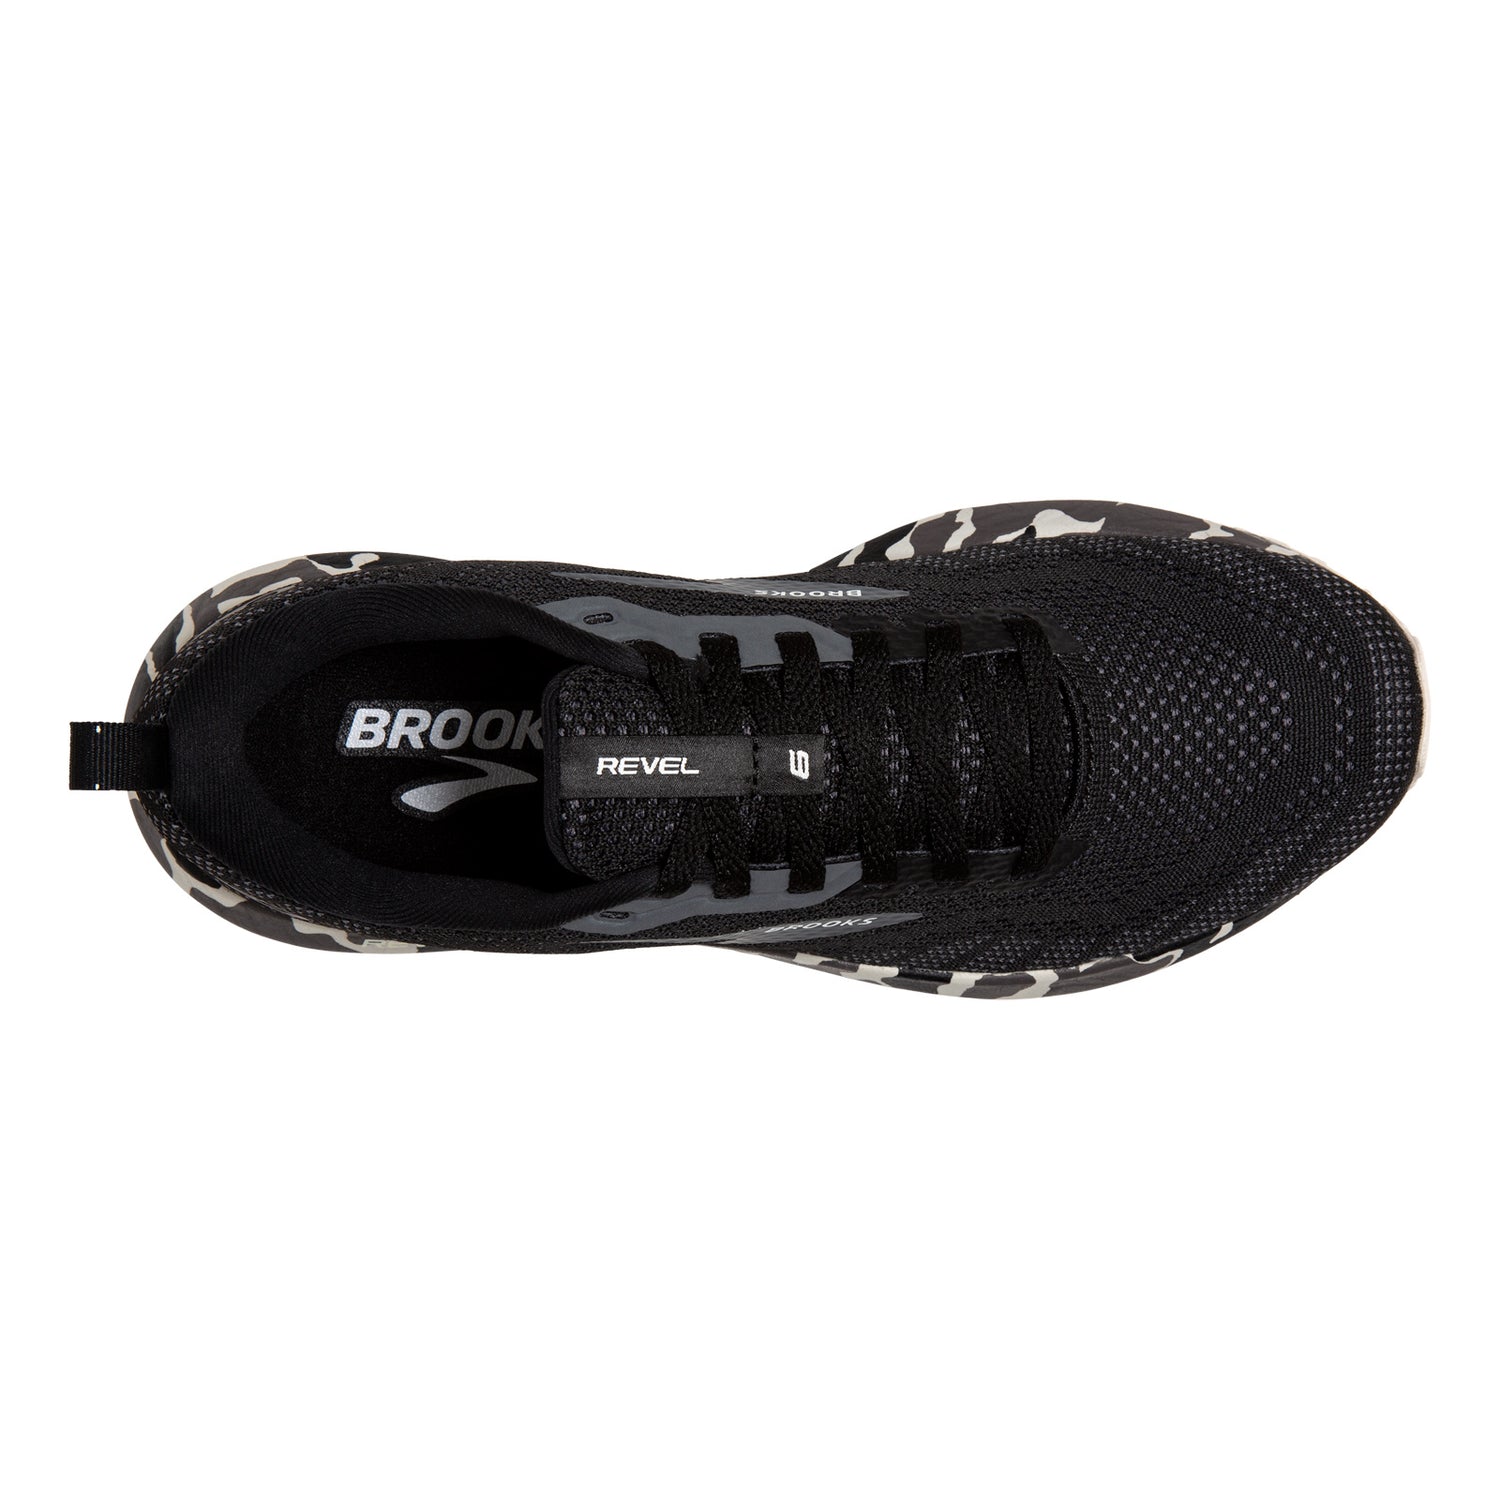 Peltz Shoes  Women's Brooks Revel 6 Running Shoe Black/Luna Rock 120386 1B 073